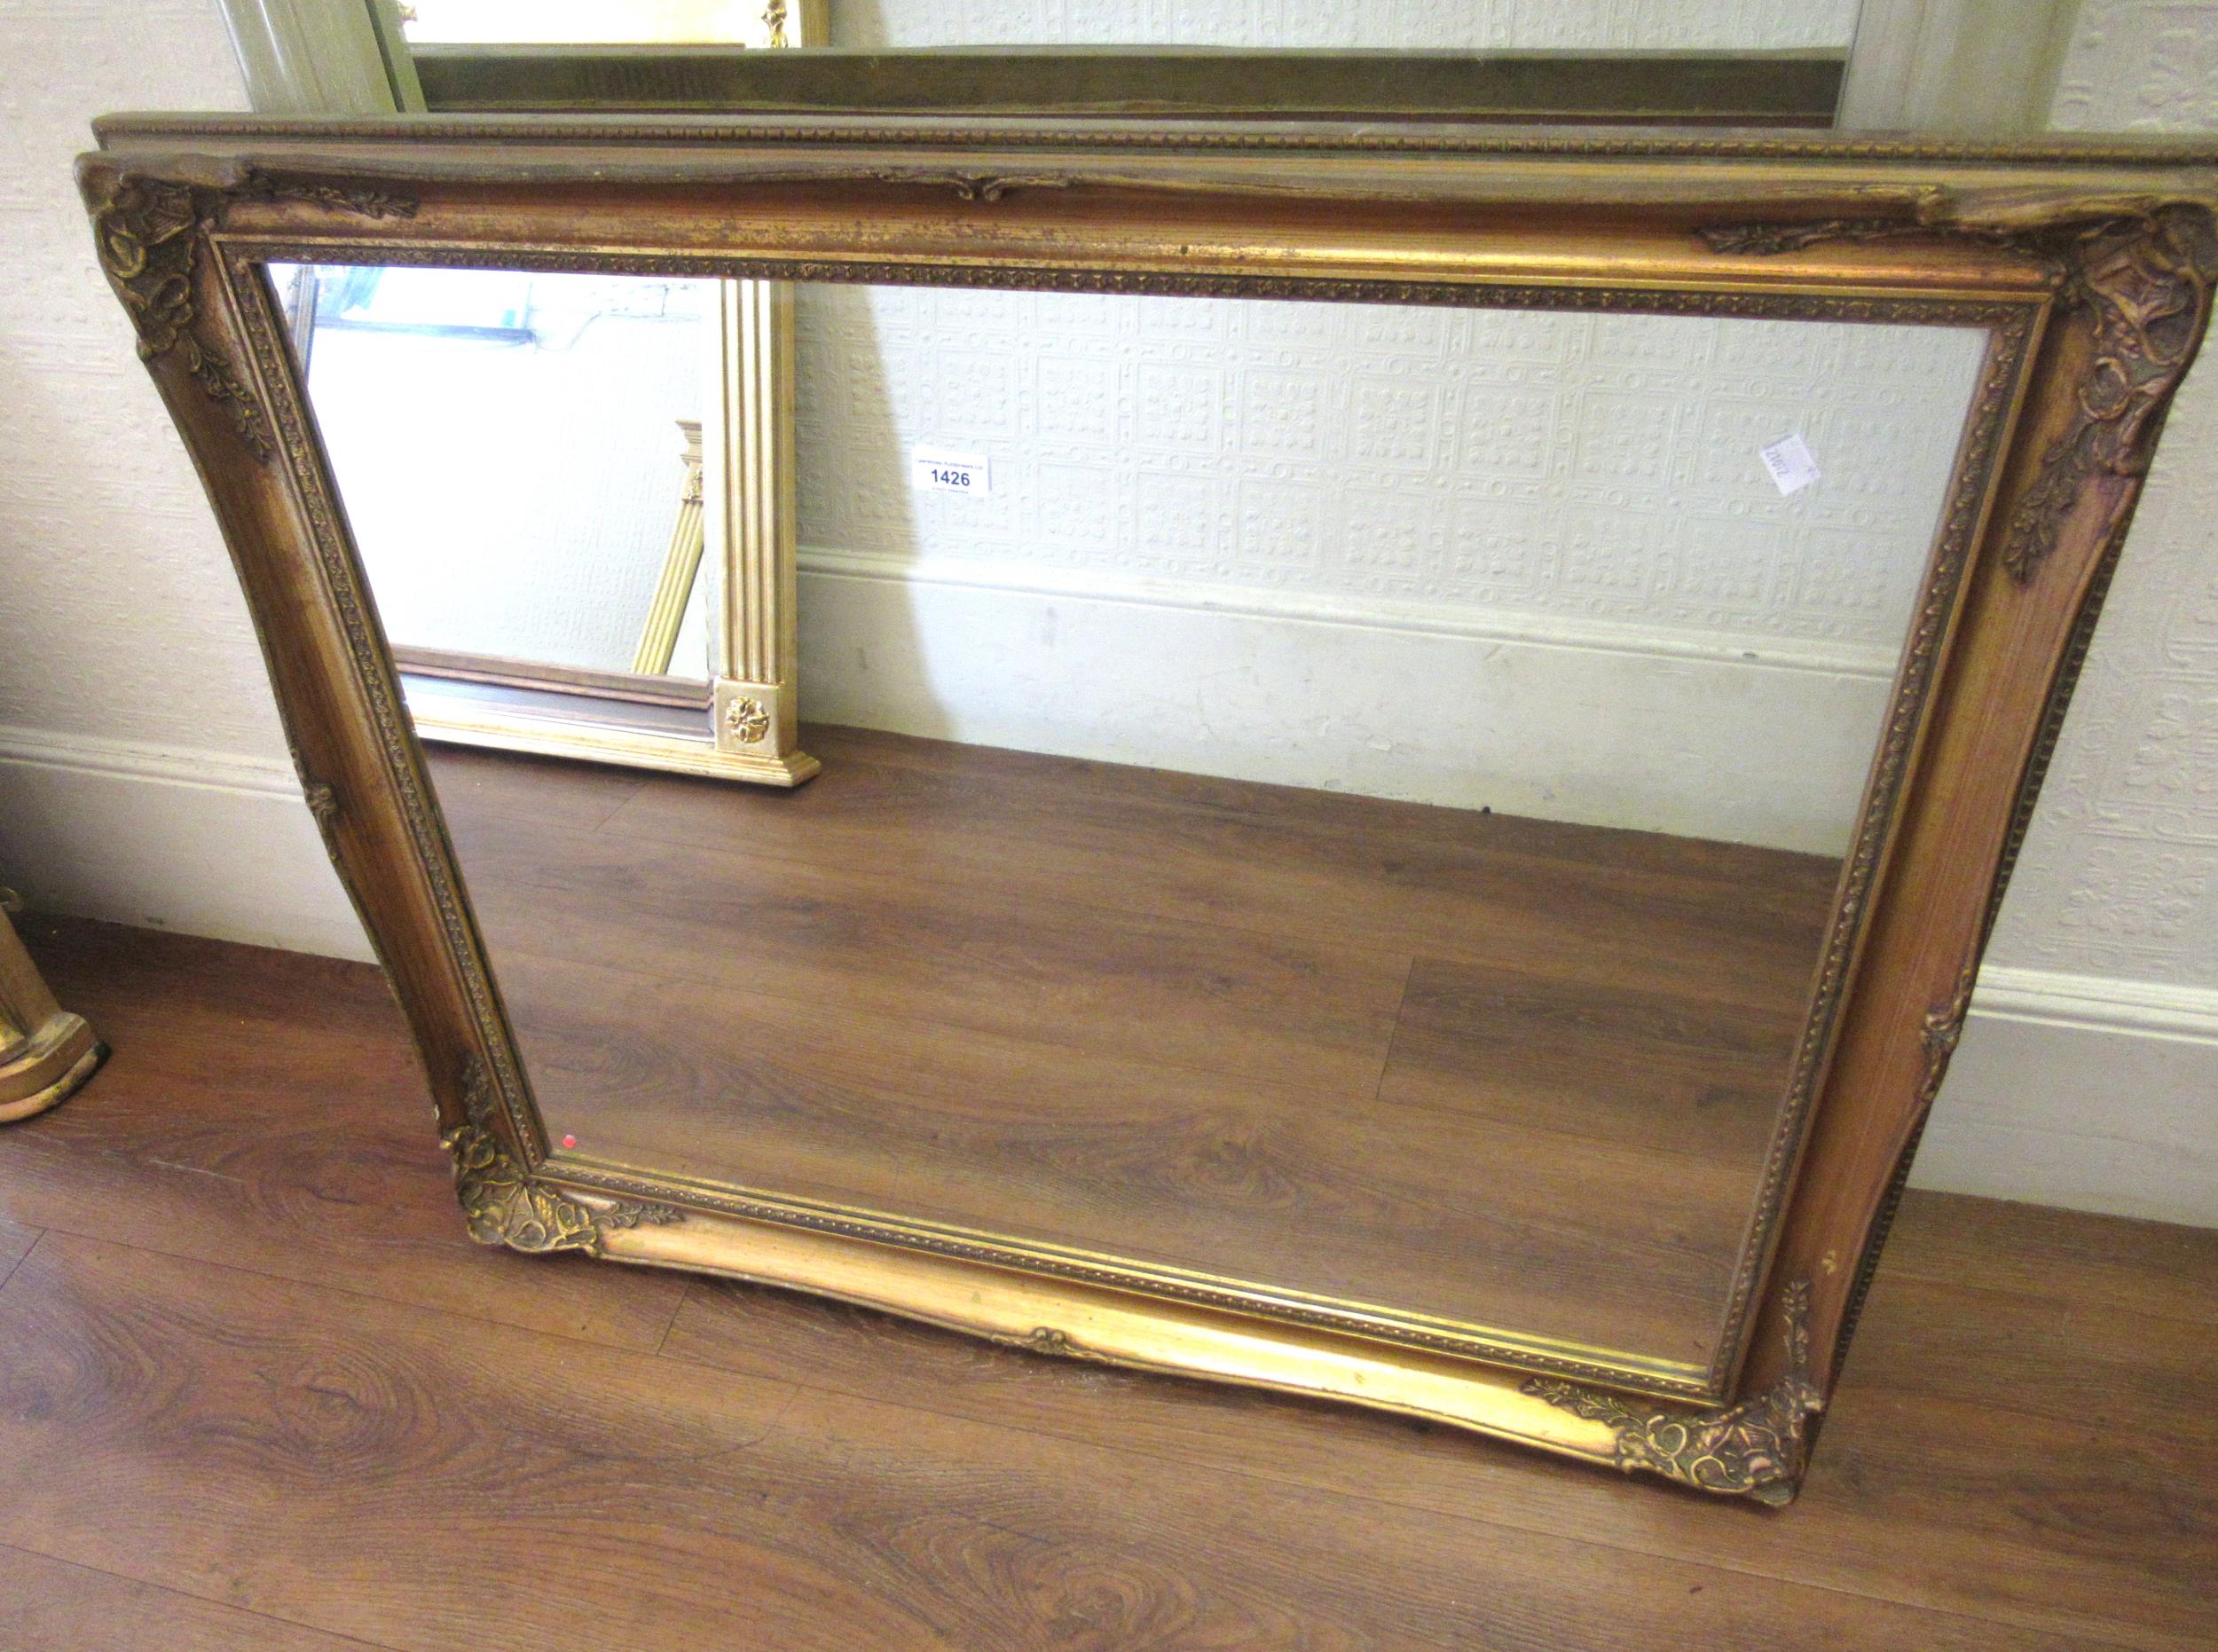 Reproduction rectangular gilt composition wall mirror, 94 x 78cm